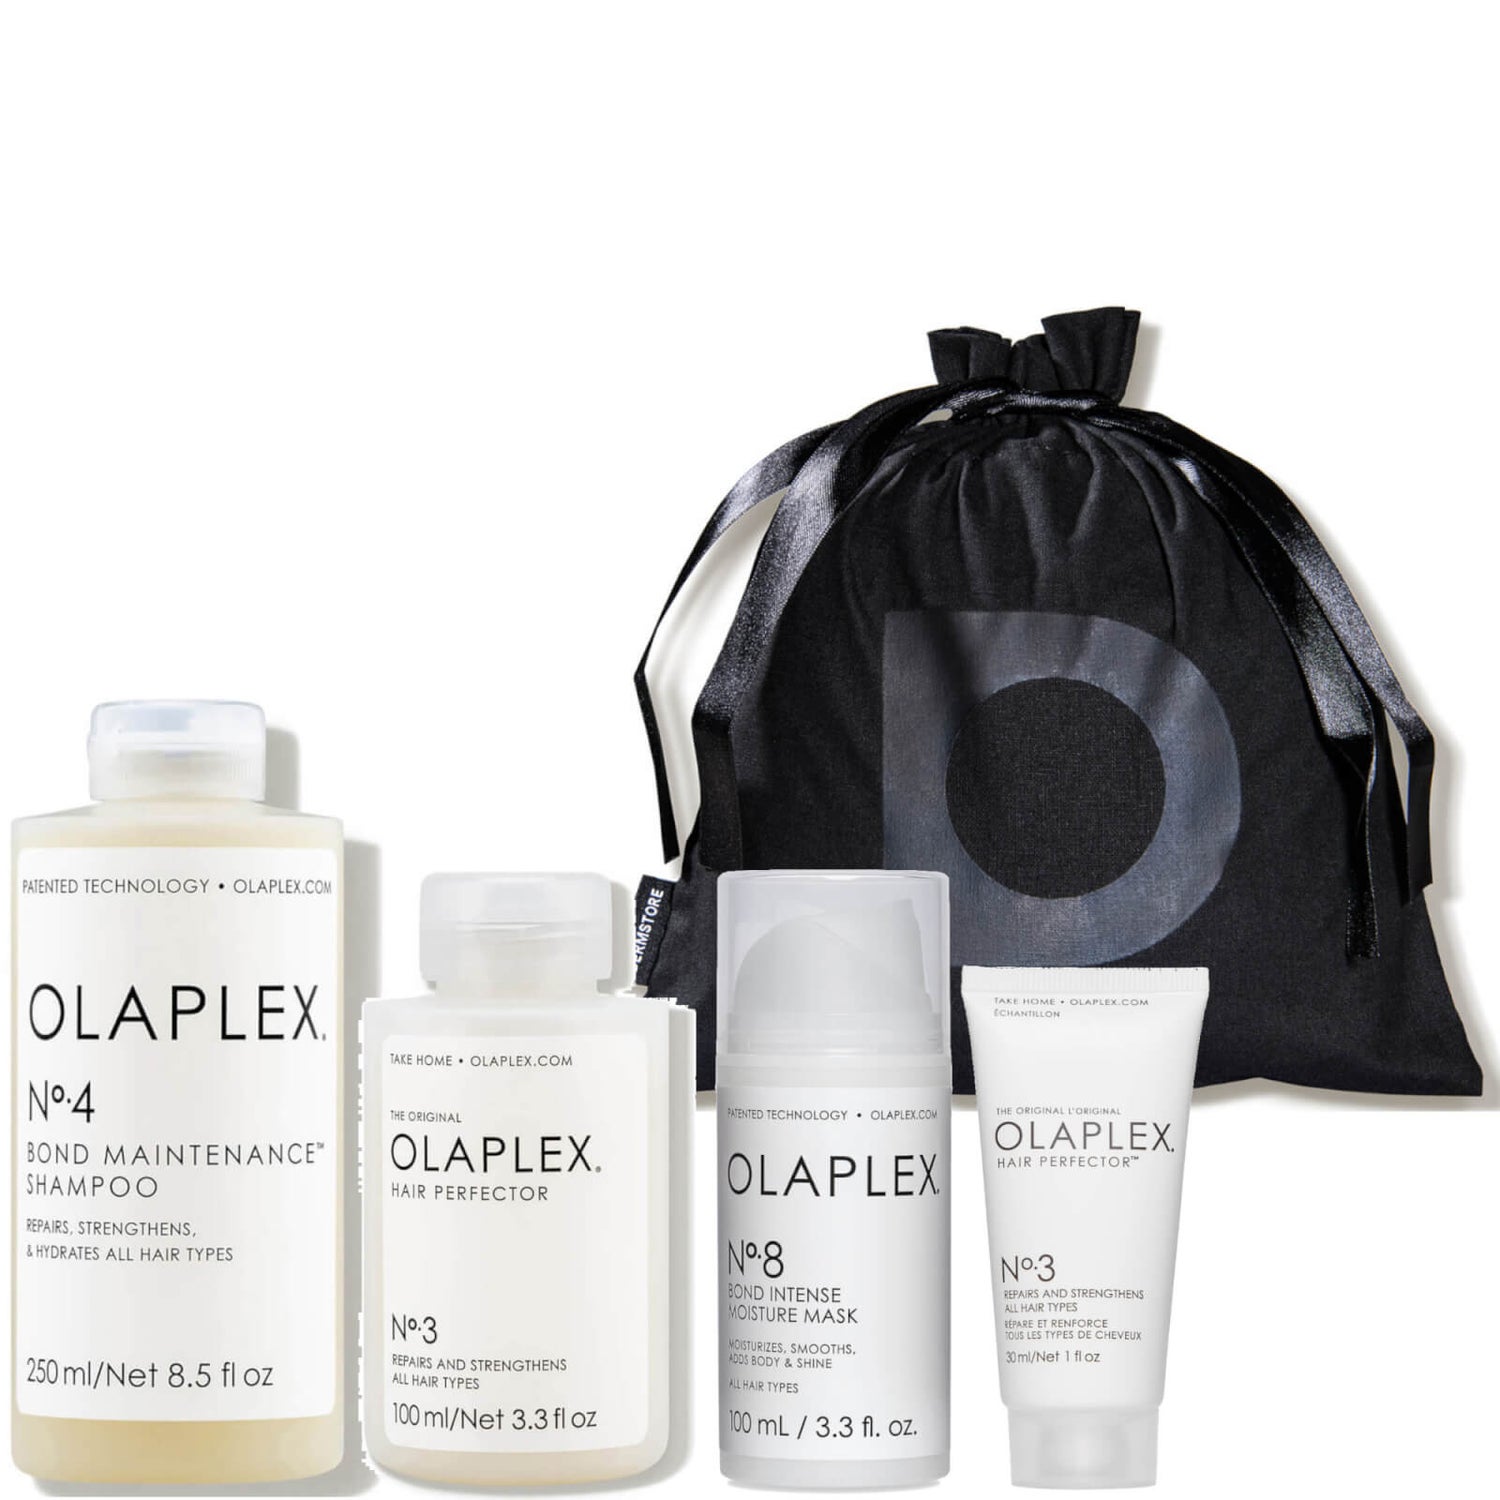 Olaplex Limited Edition Cleanse and Treatment Bundle (Worth $99)